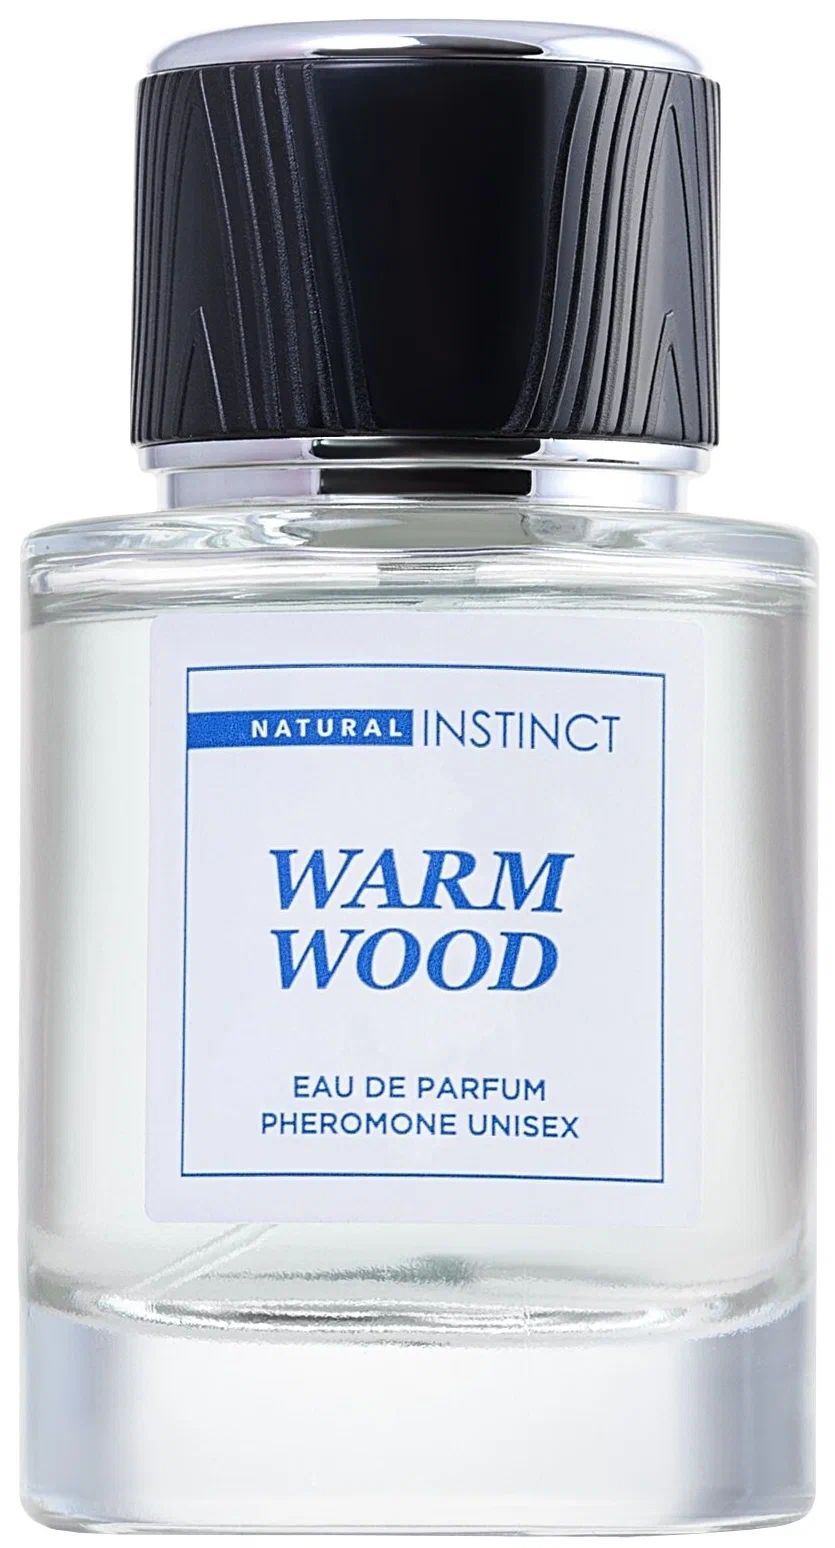 Парфюмерная вода-унисекс с феромонами Natural Instinct Warm Wood, 50 мл natural instinct парфюмированный спрей для тела с феромонами pure crystal 100